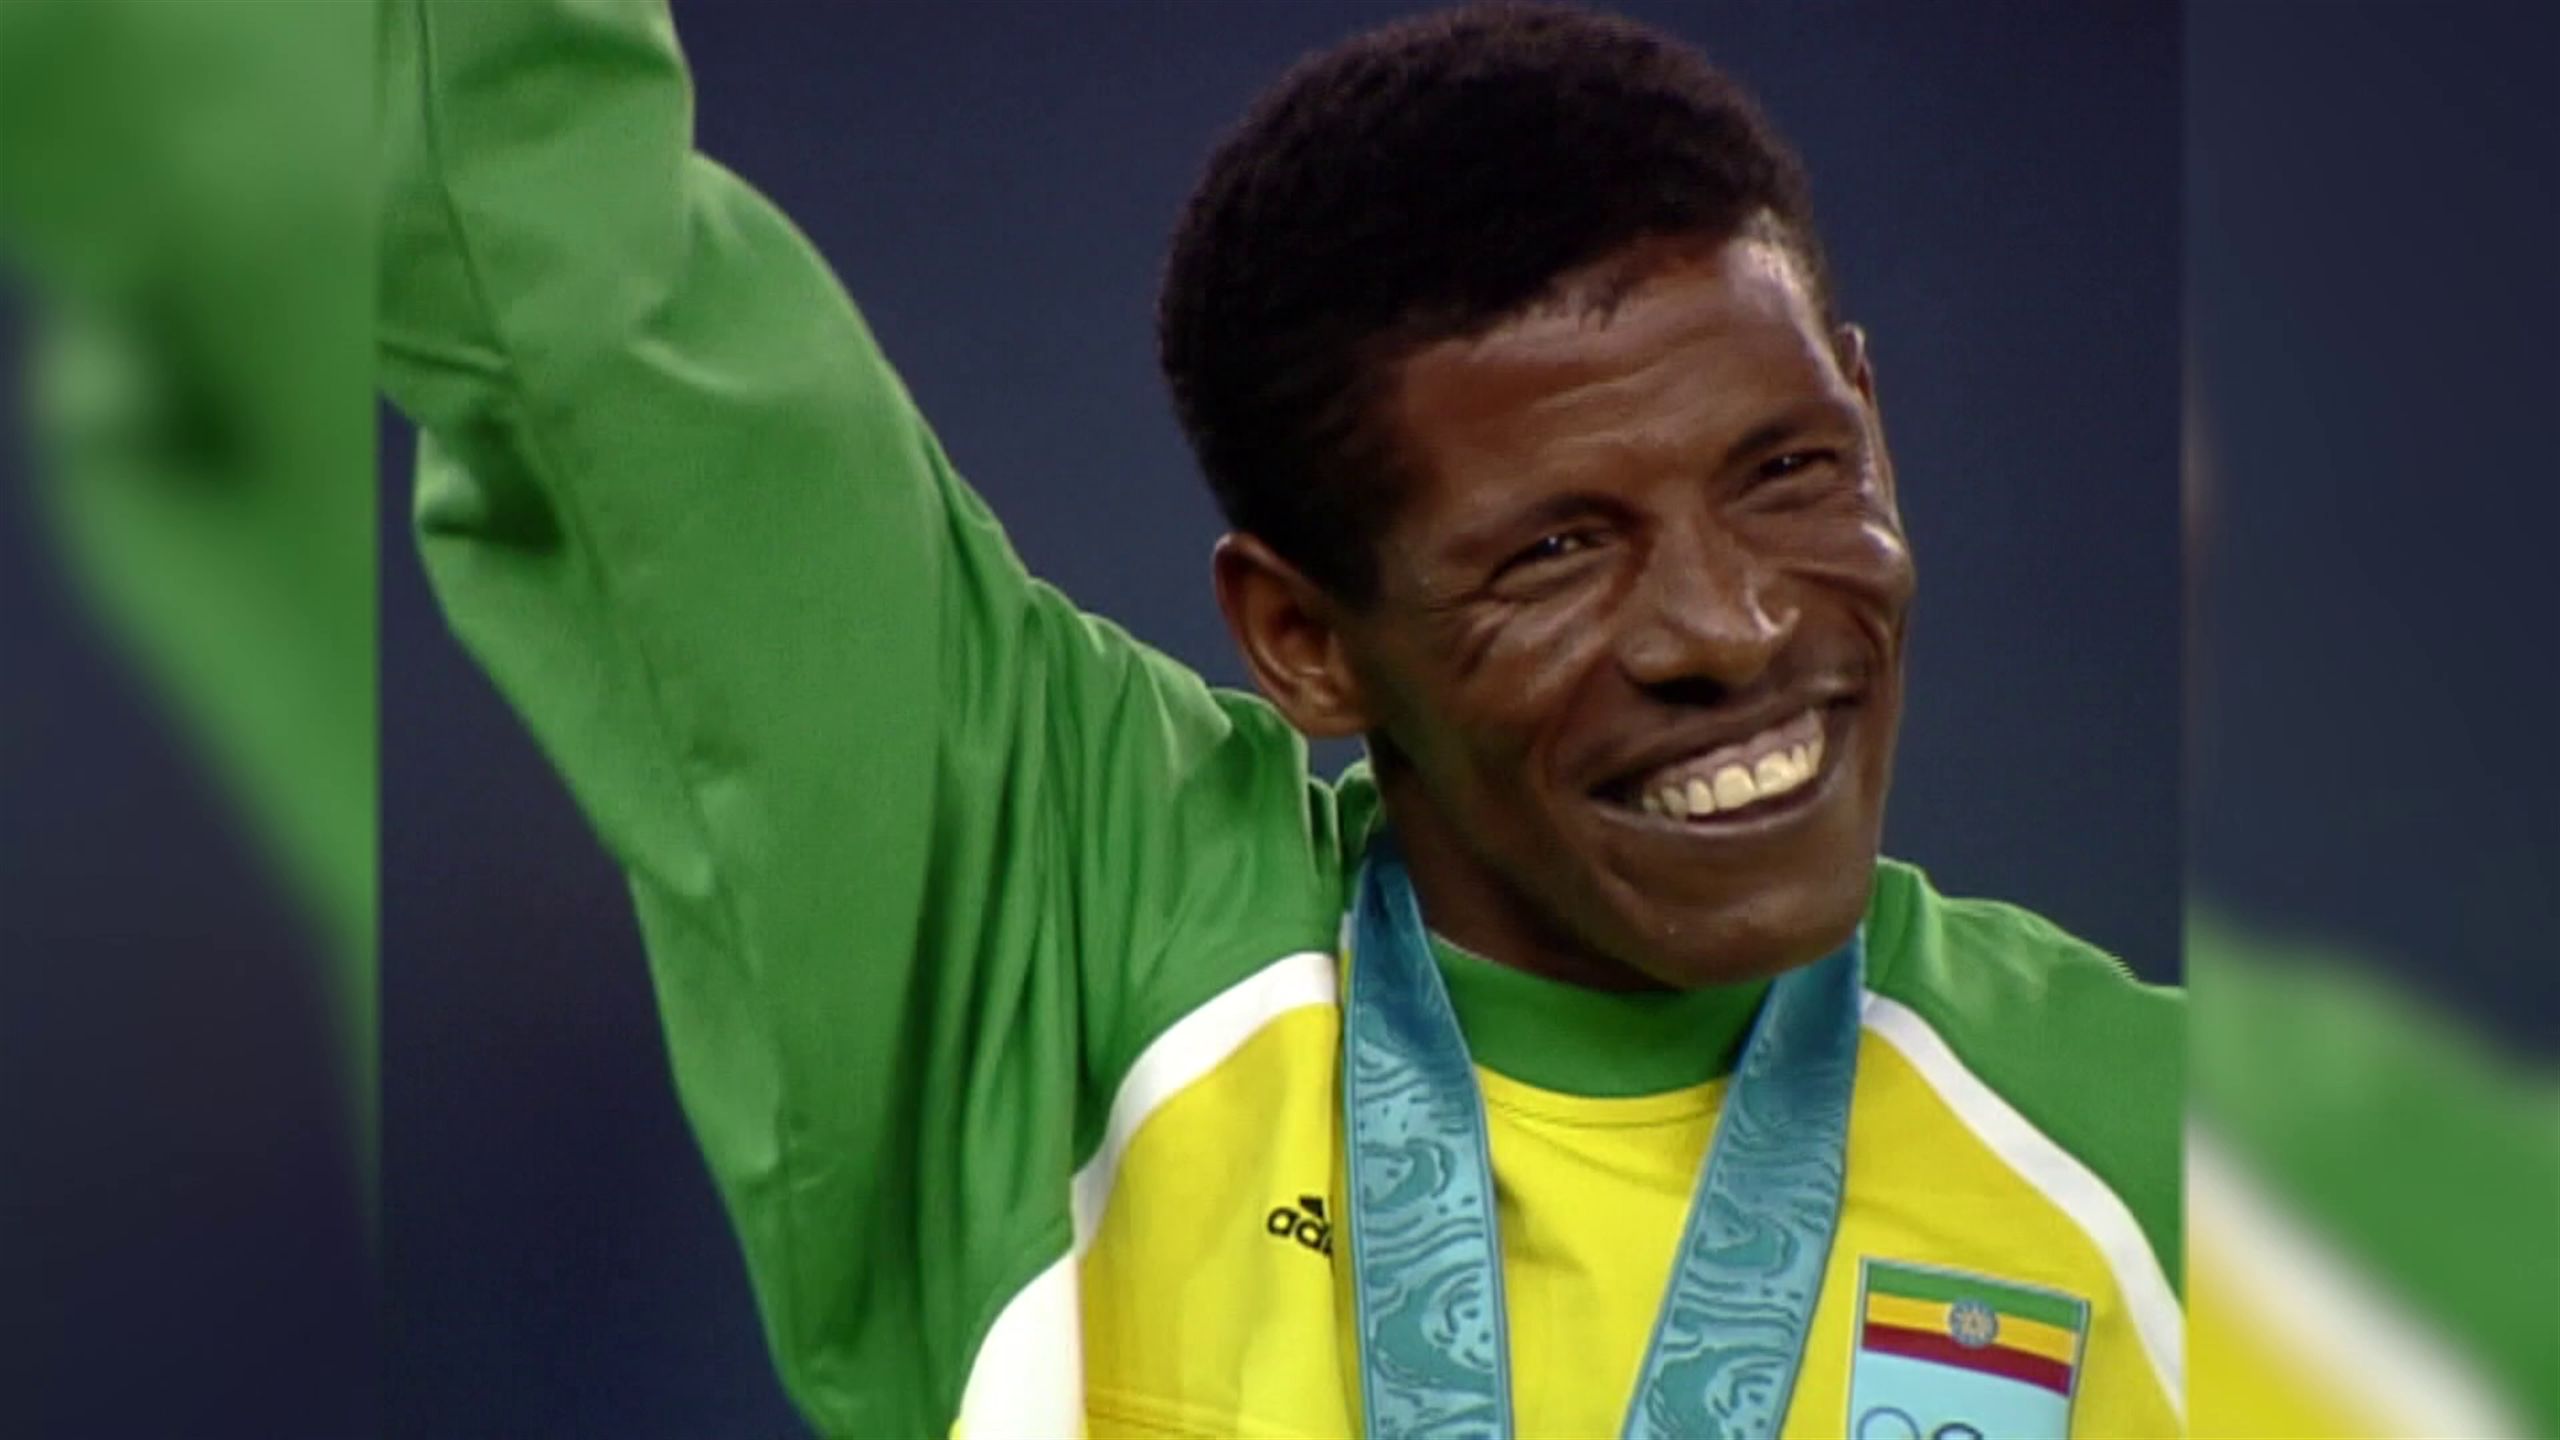 Sydney 2000: Haile Gebreselassie vince (di nuovo) i 10mila metri